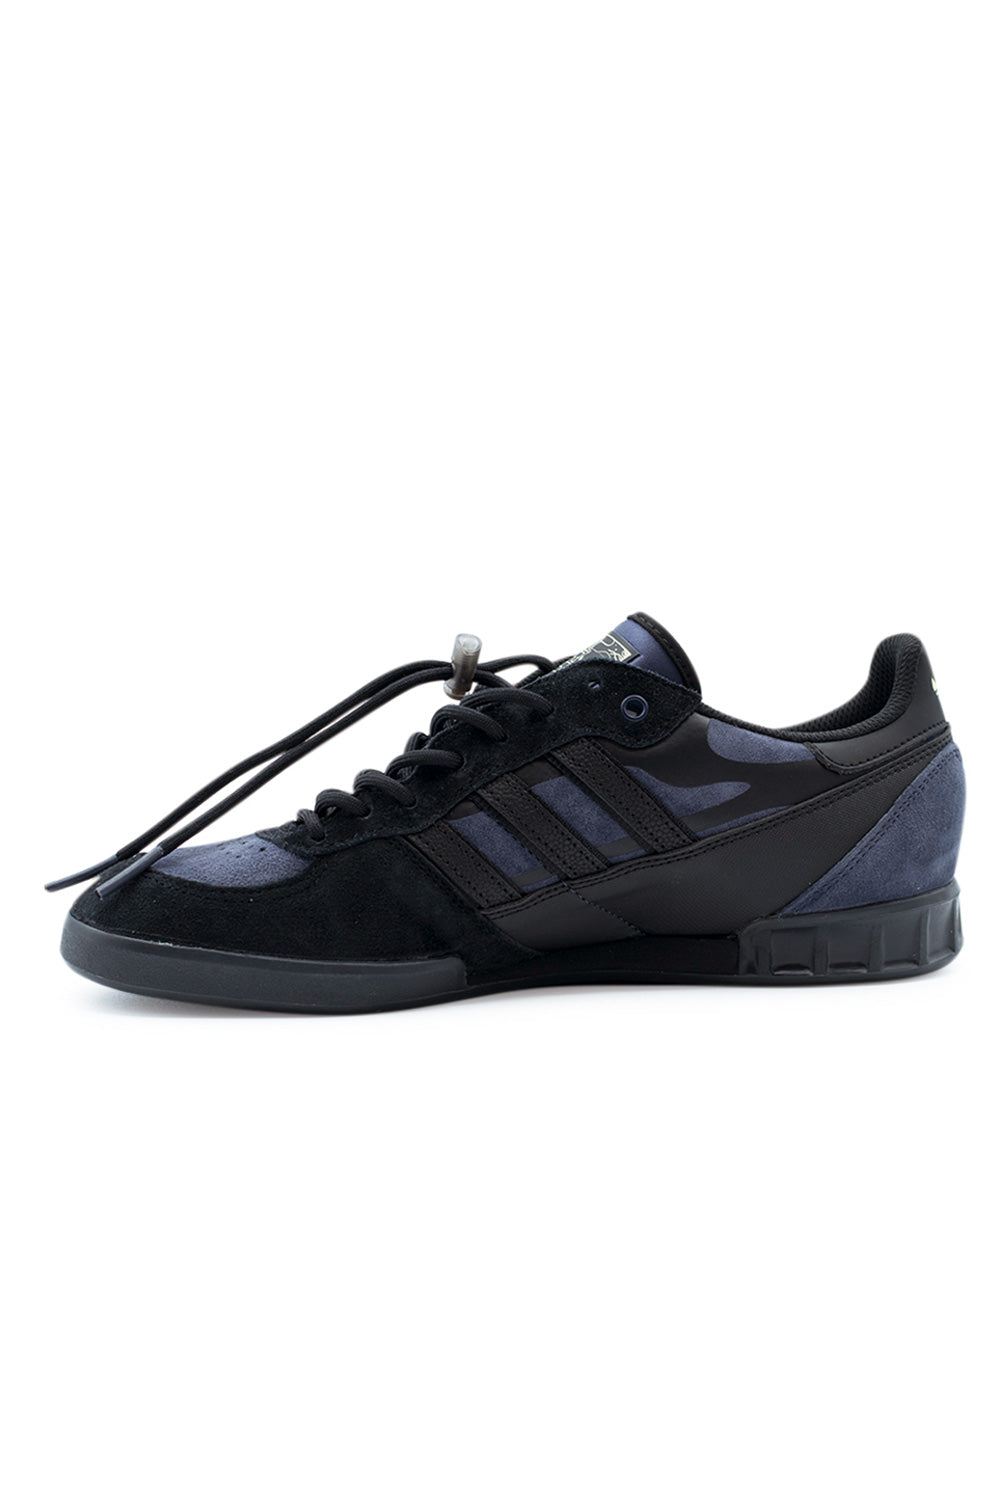 Adidas Handball Top Shoe (Mike Arnold) Core Black / Dark Blue / Flash Orange - BONKERS